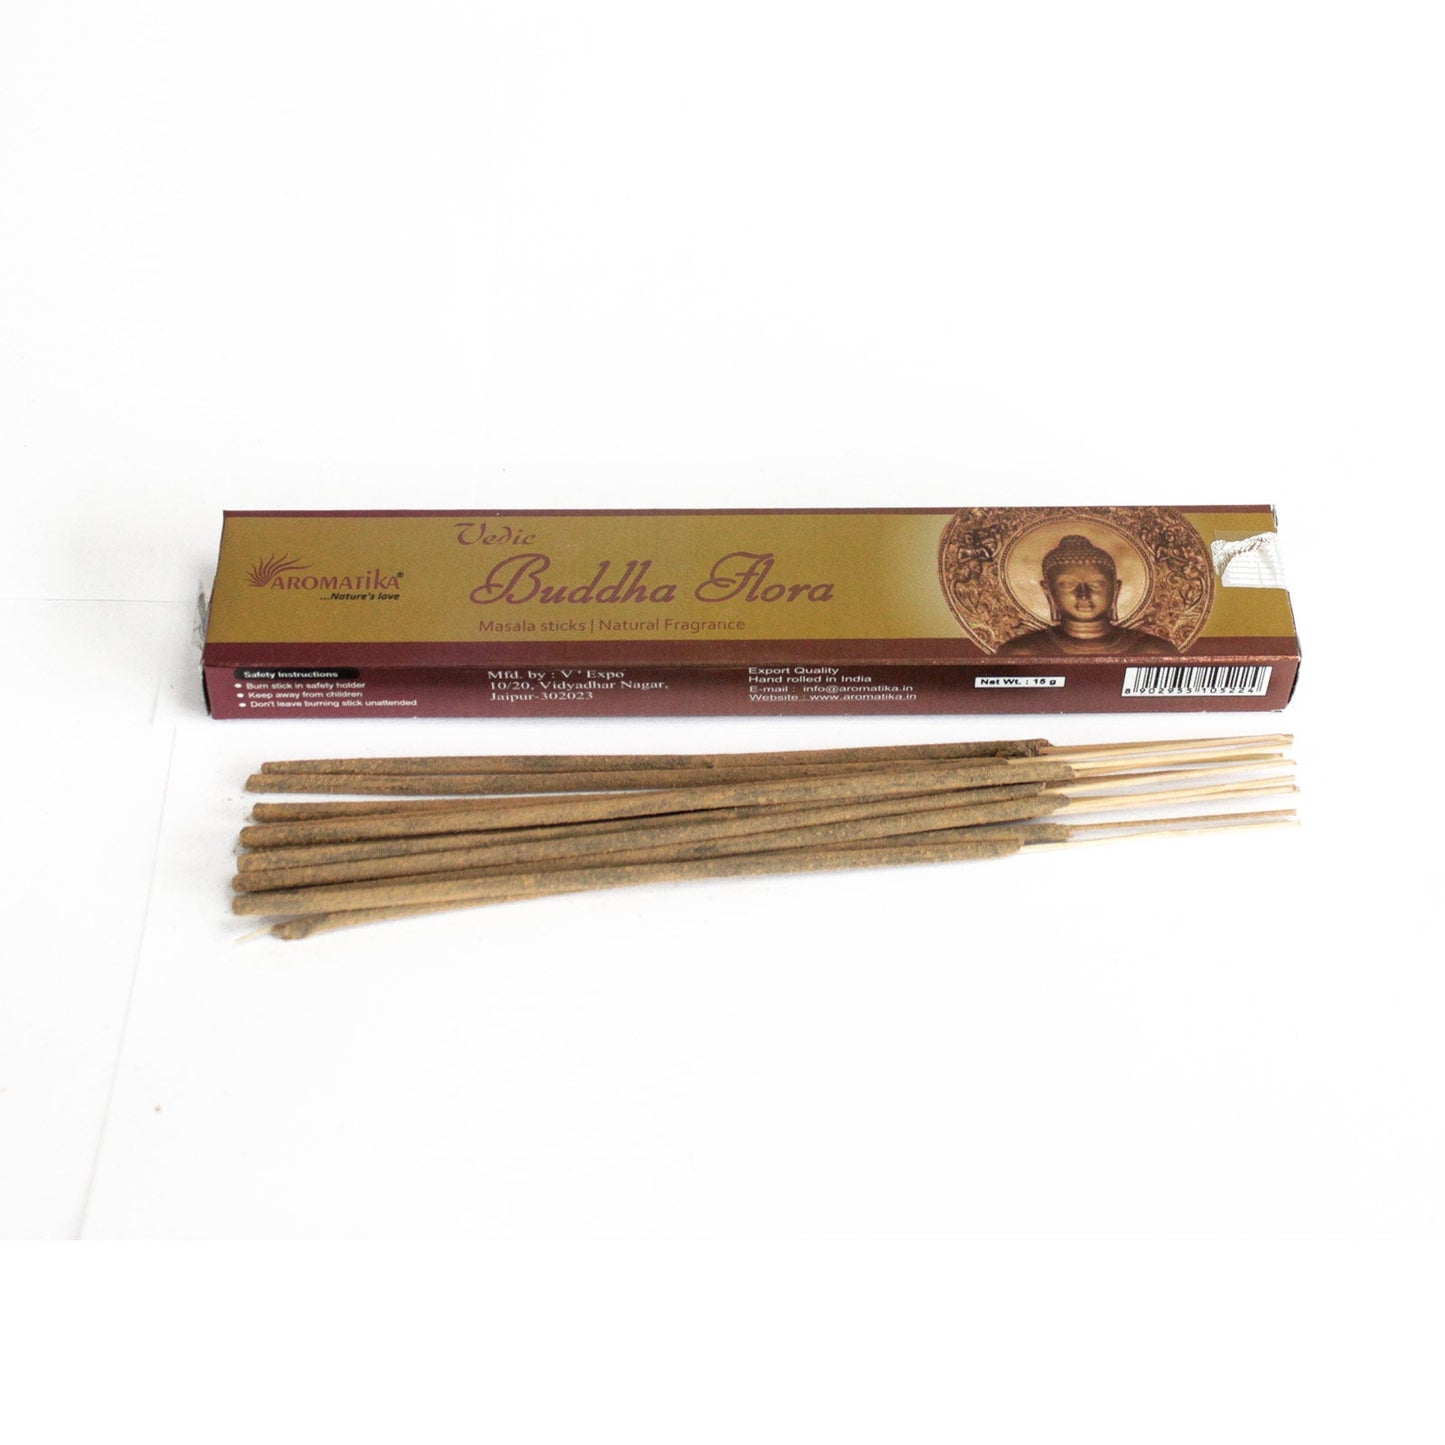 Vedic Natural Incense Sticks Incense Sticks Soul Inspired Buddha Flora 